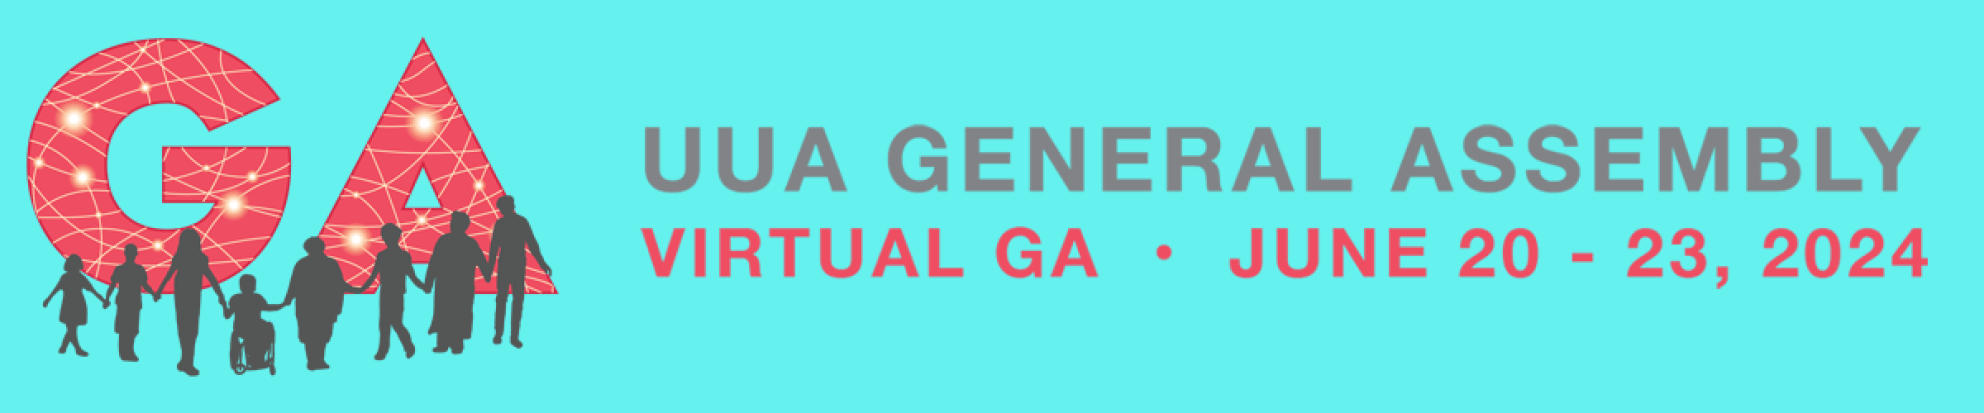 UUA General Assembly. Virtual GA, June 20-23, 2024